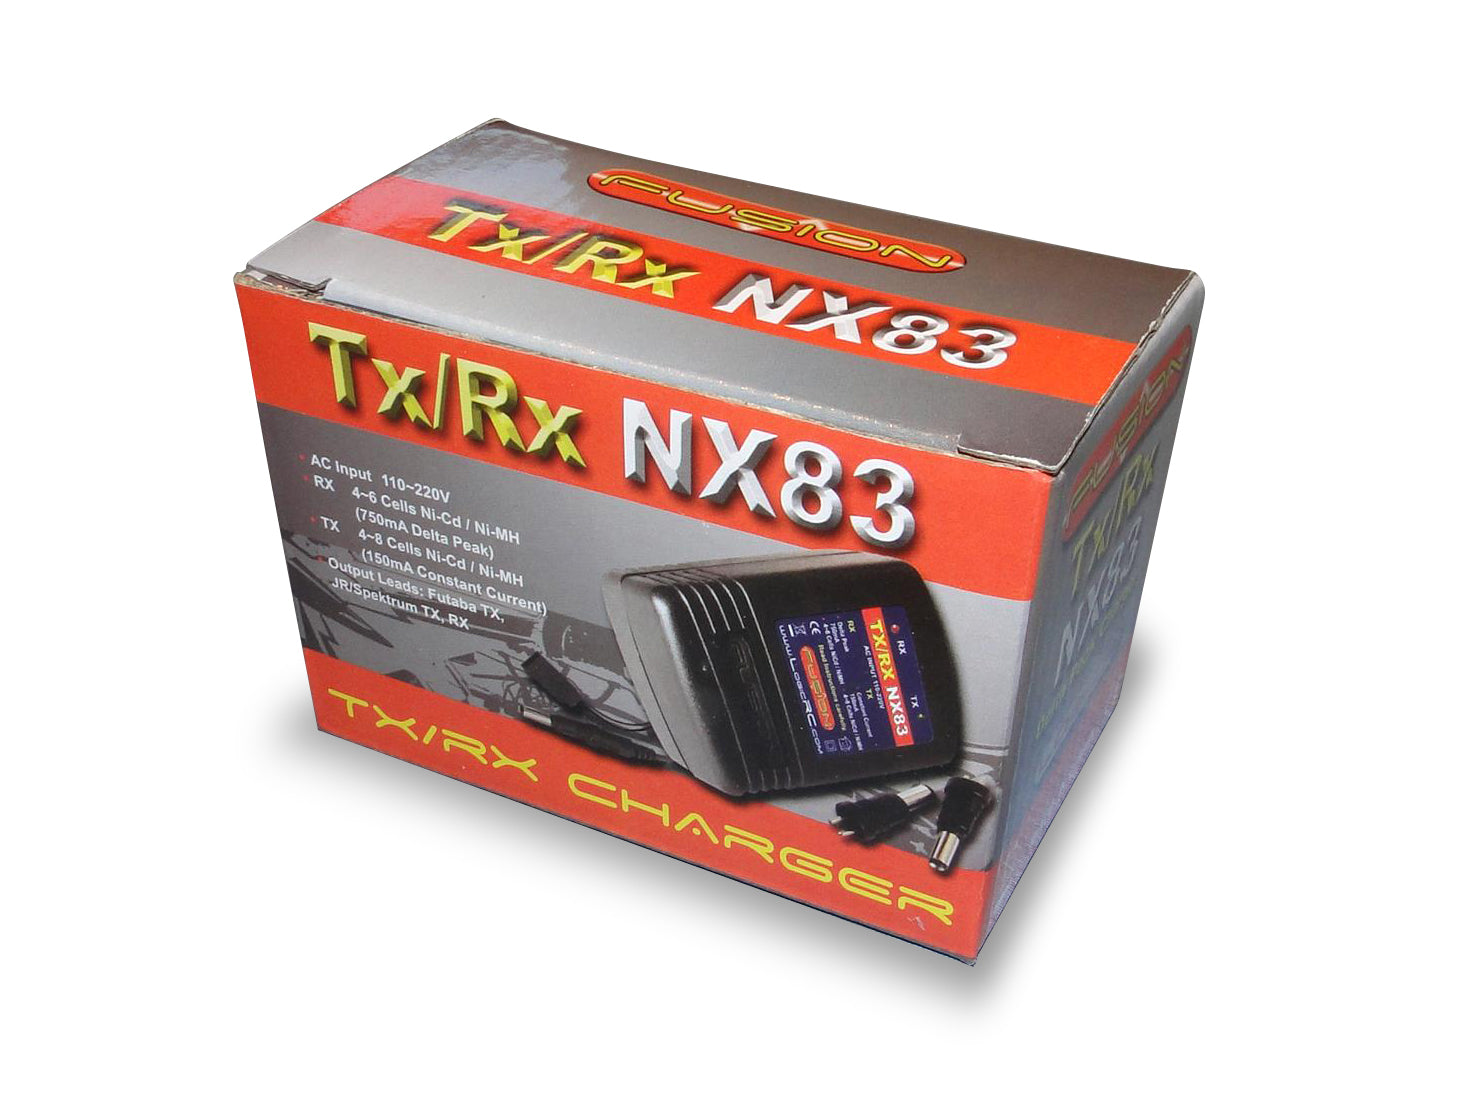 Fusion NX83 Tx/Rx AC Wall Charger for Futaba & JR TX / RX O-FS-NX83